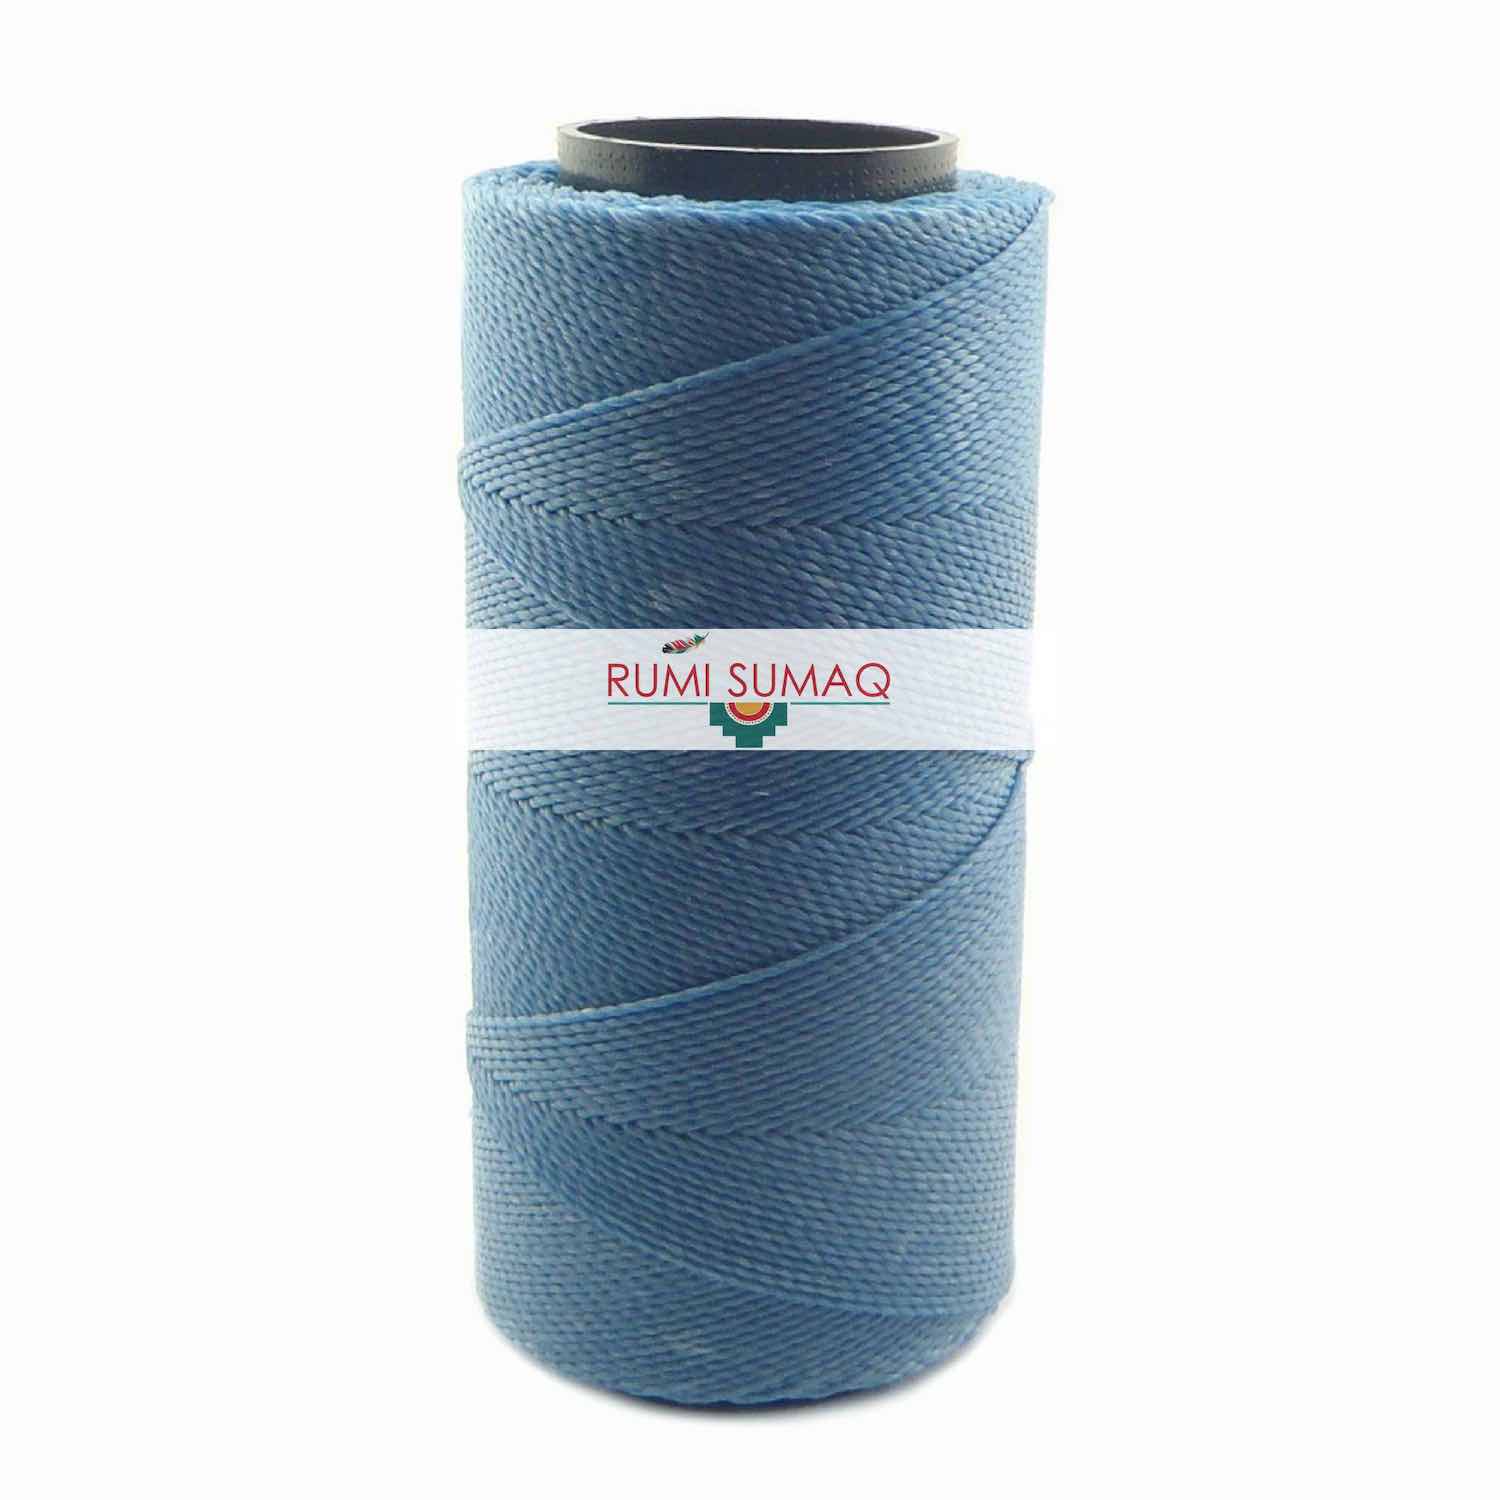 Settanyl 04-606 Waxed Polyester Cord 1mm Waxed Thread in Faded Denim (Light Blue) | RUMI SUMAQ Brazilian Waxed Cords